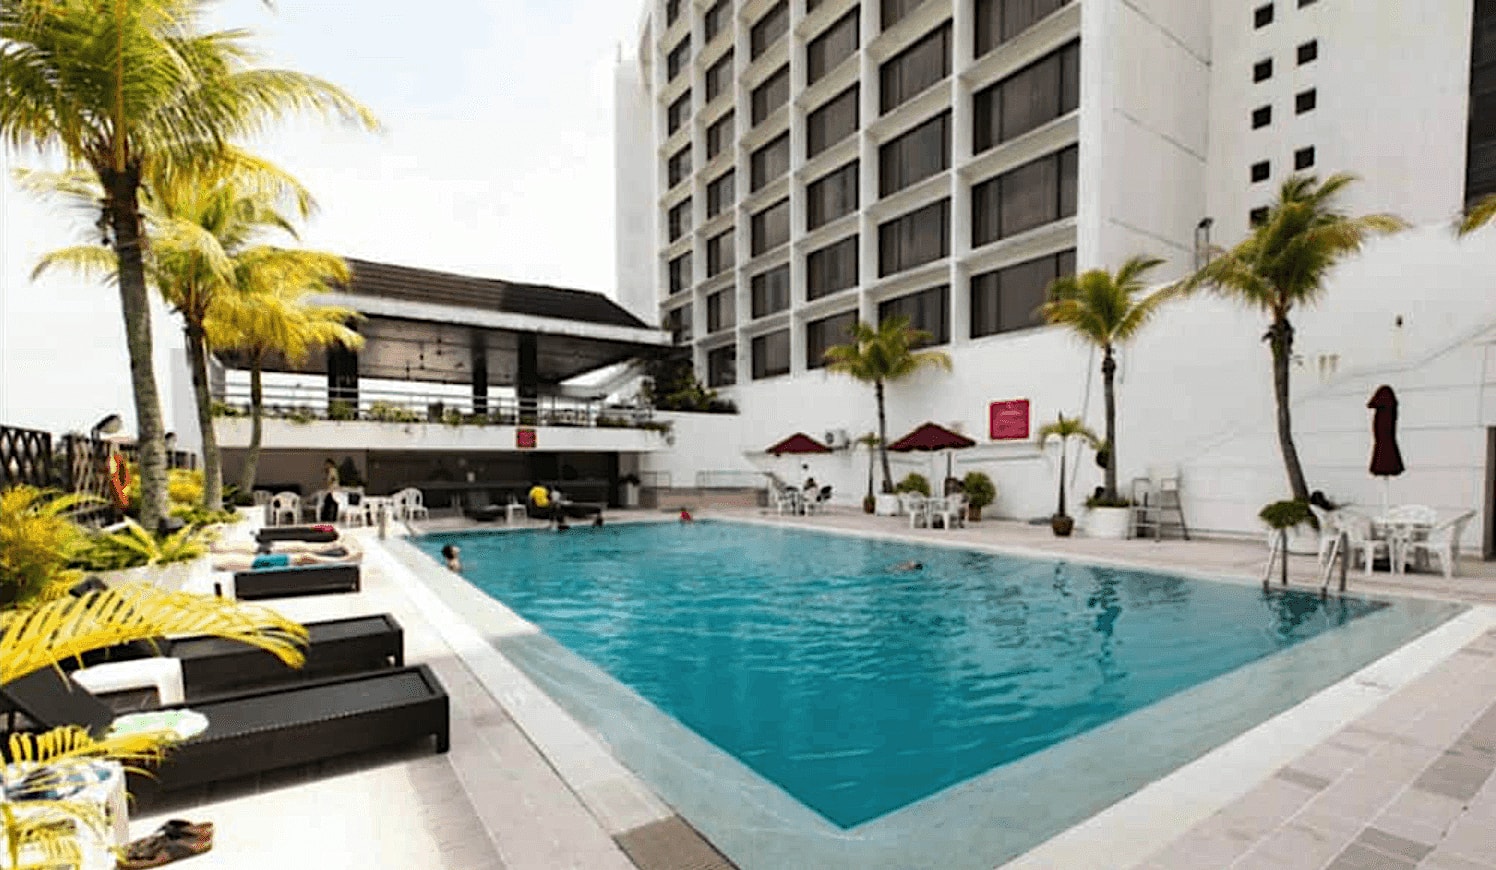 5 Star hotels information in the world: Five Star Hotel Johor Bahru